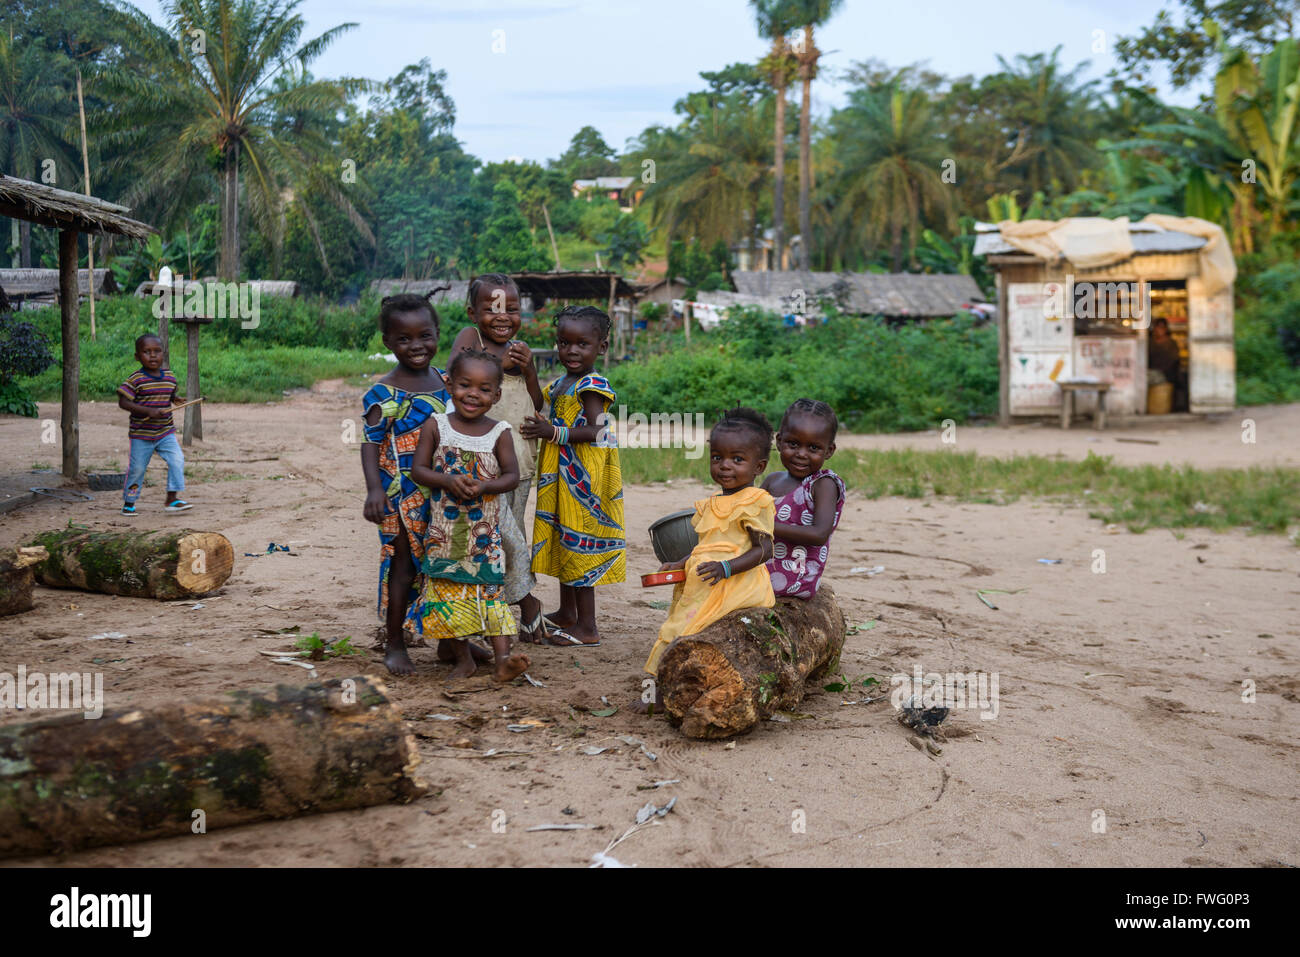 Bantu kids, Bayanga, Central African republic, Africa Stock Photo